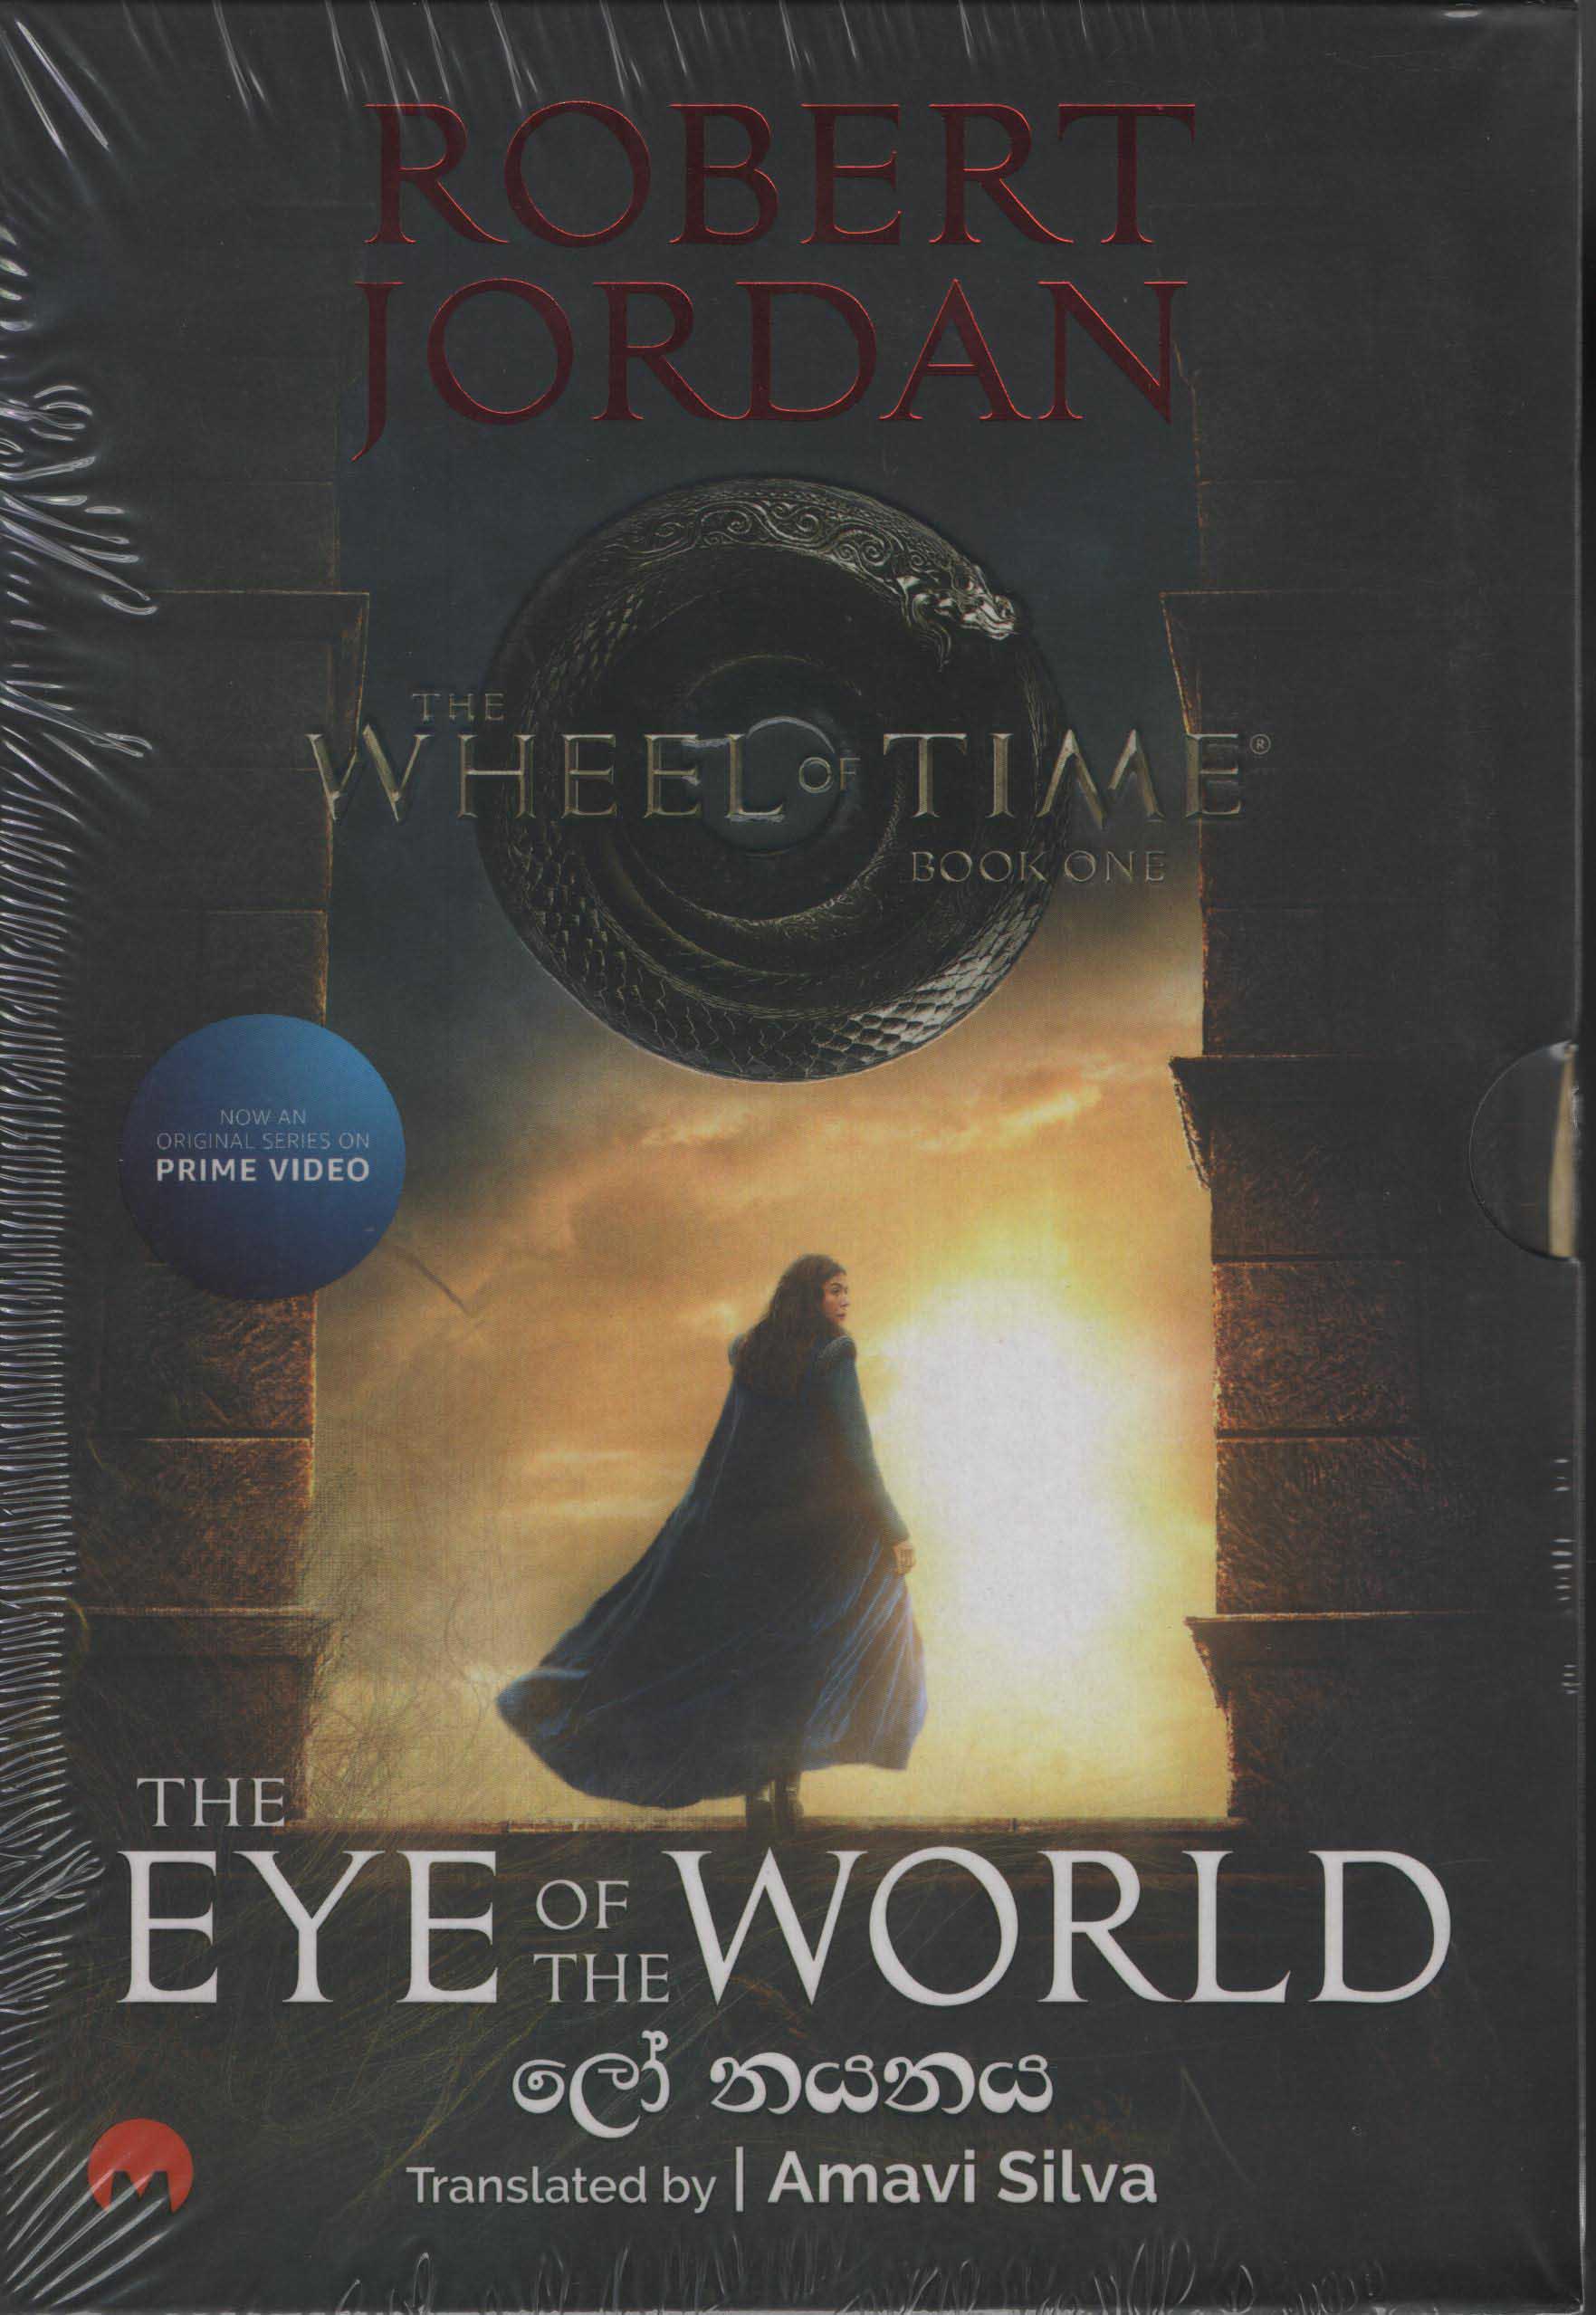 Lo Nayanaya Translation of The Wheel of Time Book I and II By Robert Jordan